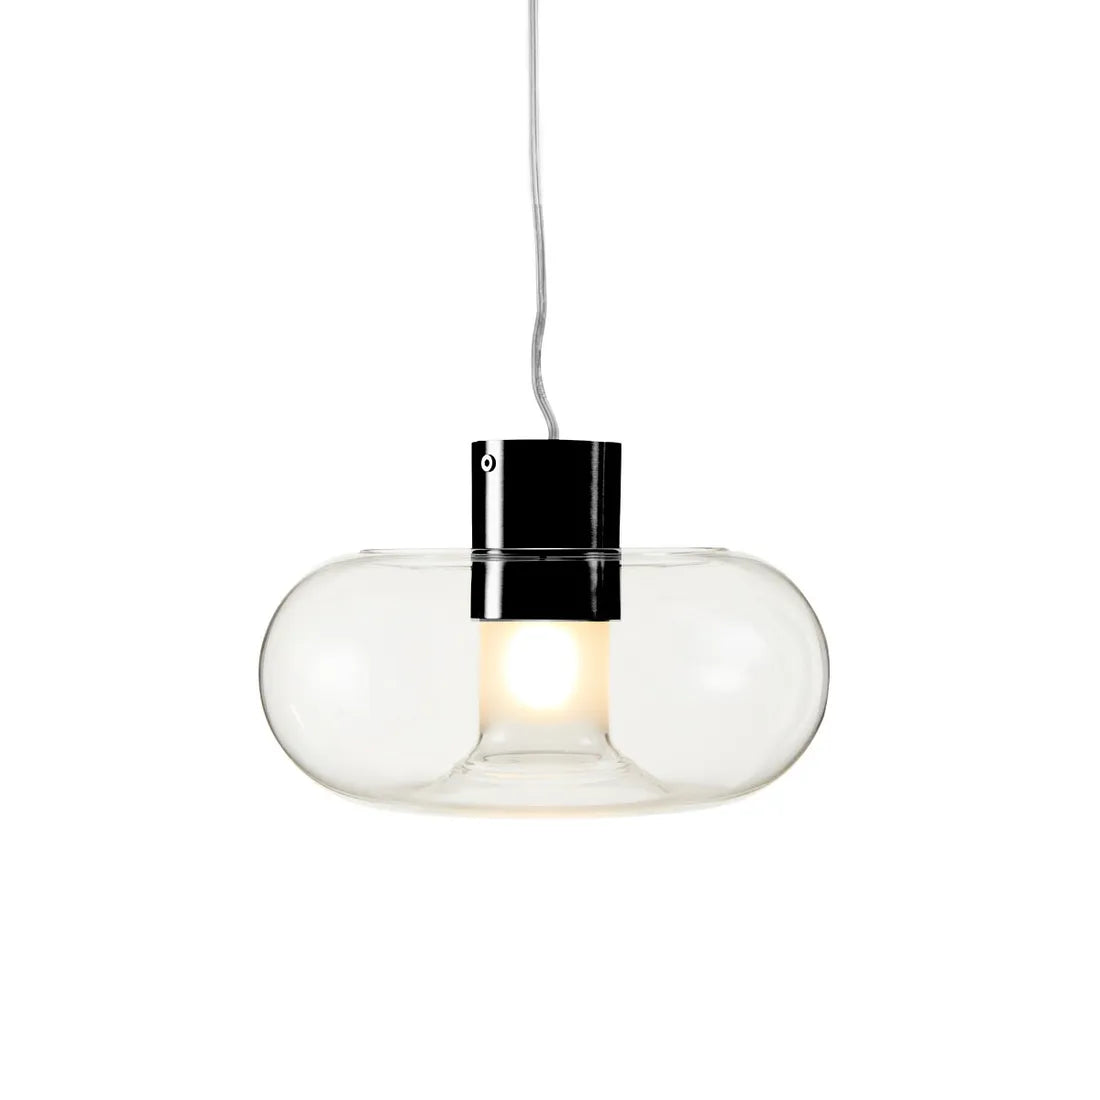 Glass pendant lamps, ball lights, industrial lights & lamps, office pendant light, designer hanging lights